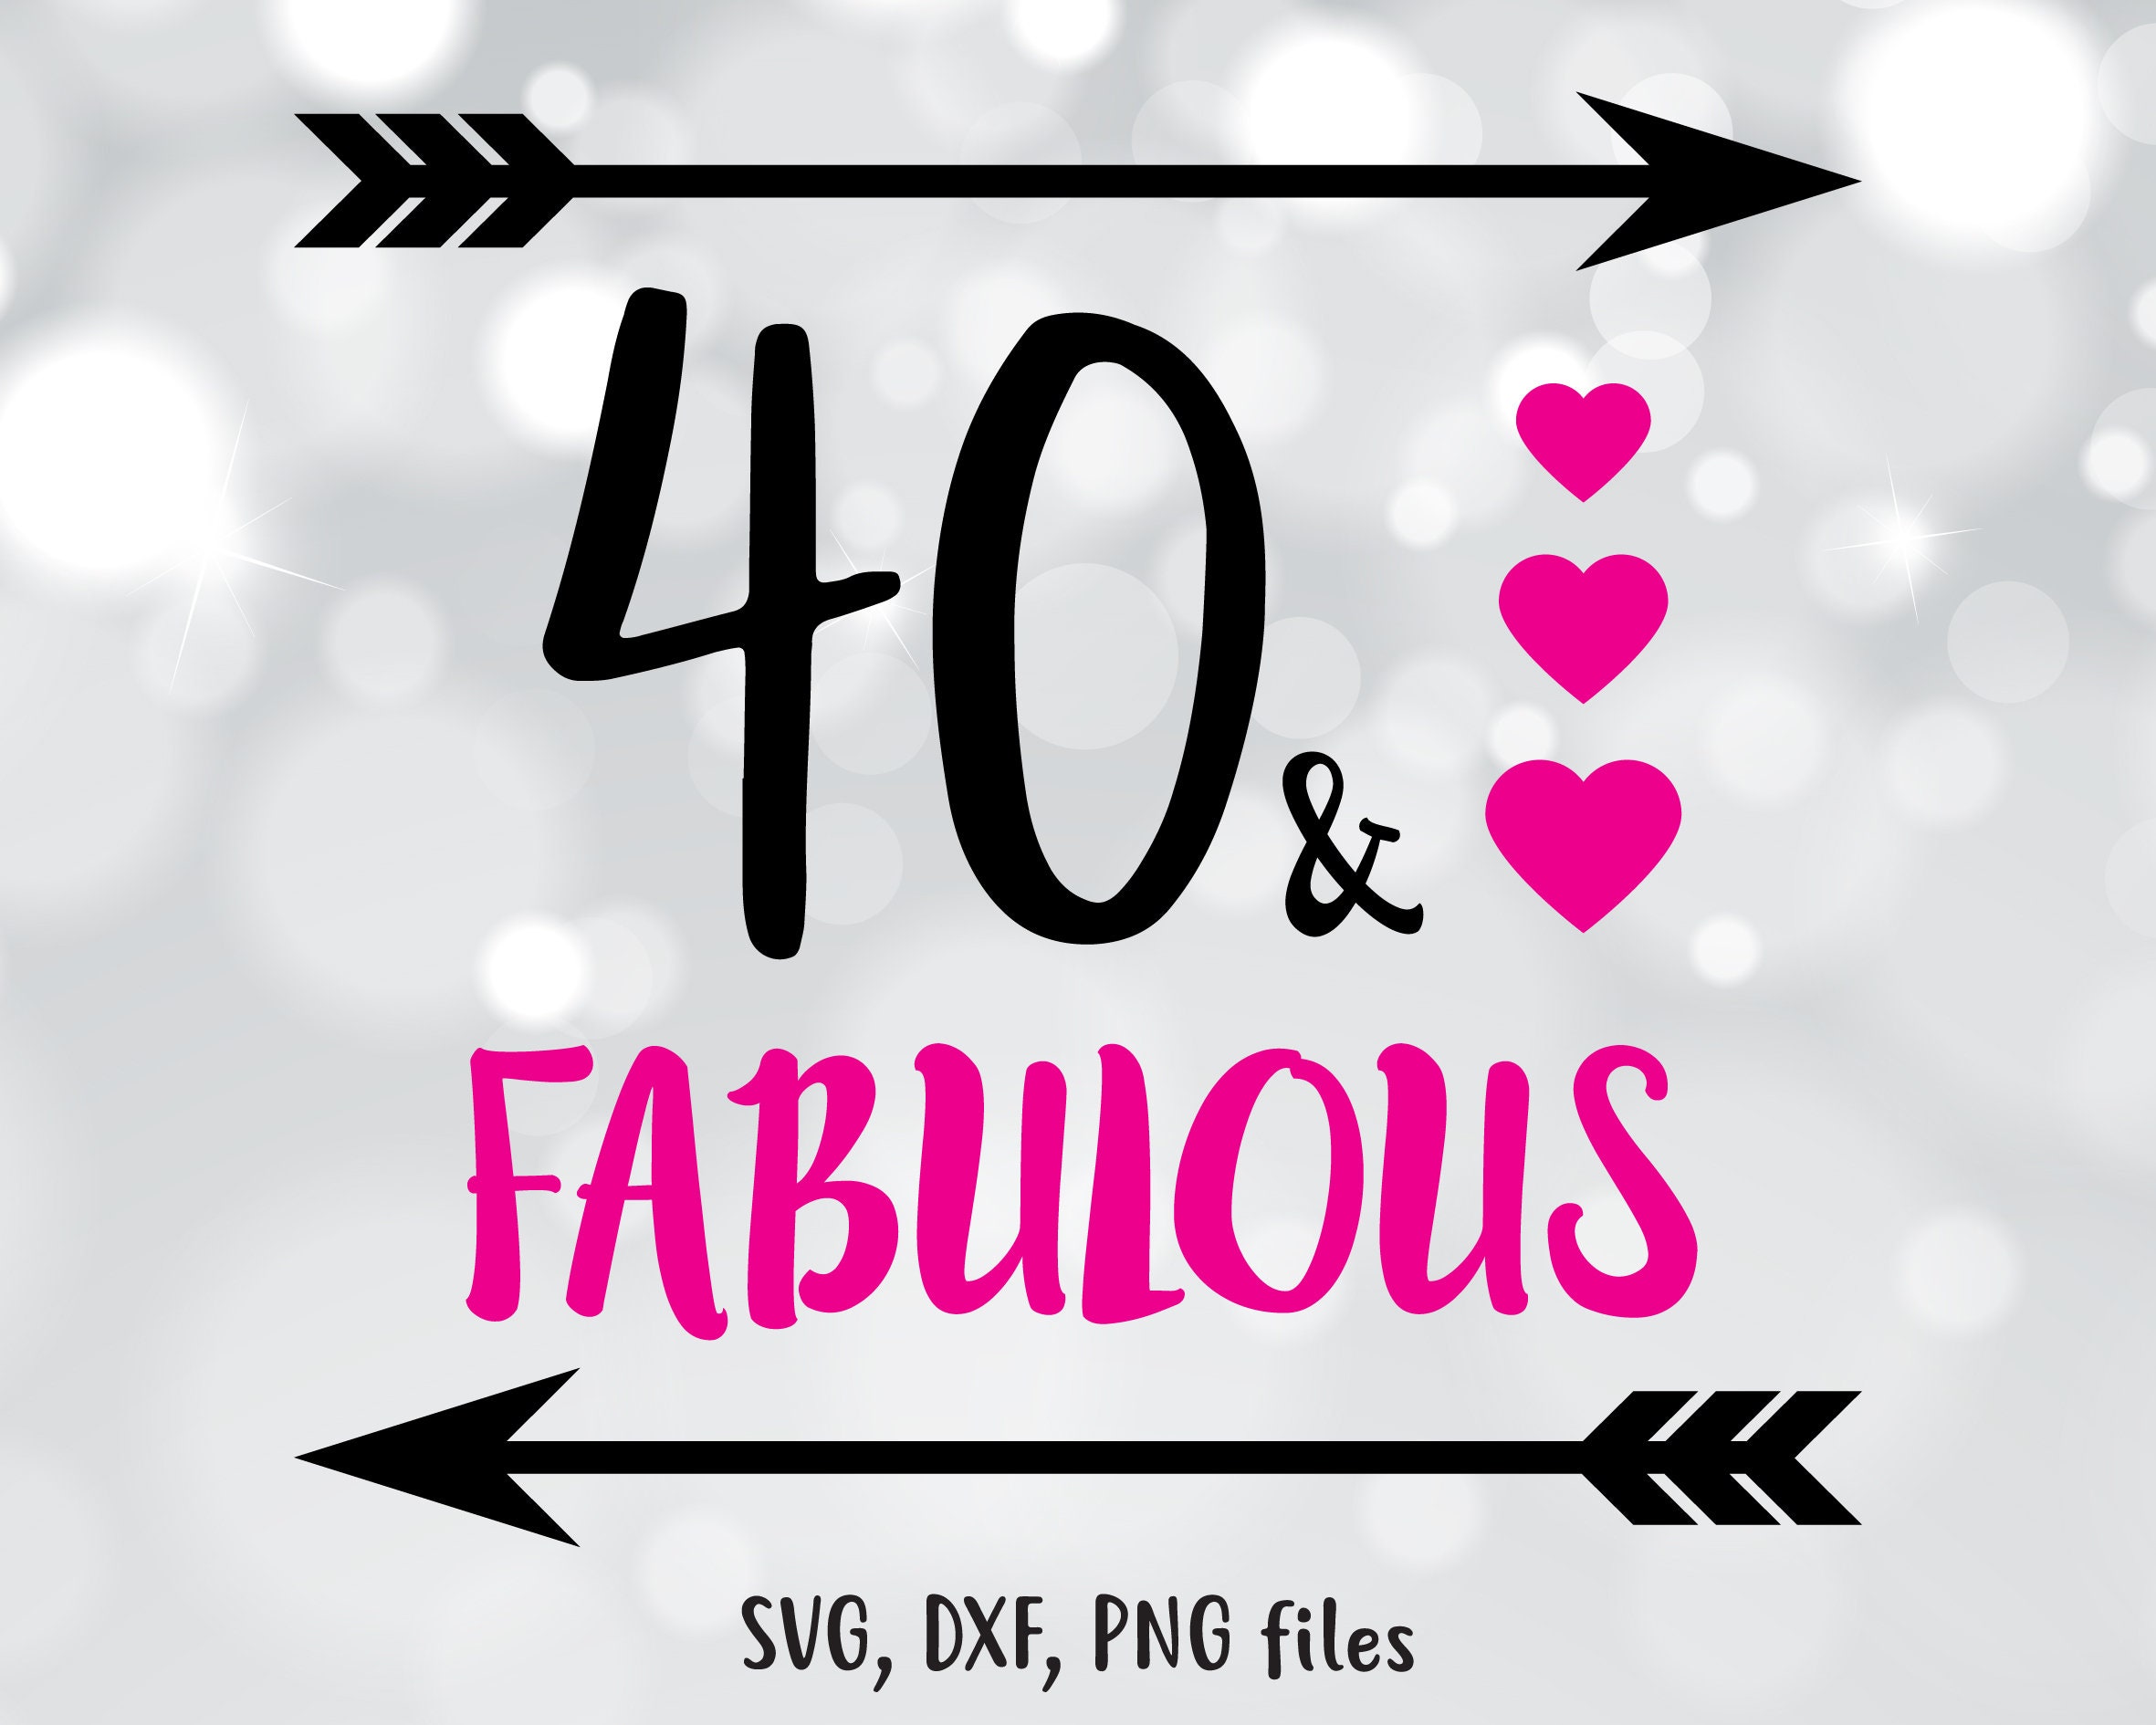 40 & fabulous SVG Fabulous DXF 40 Birthday Cut File | Etsy